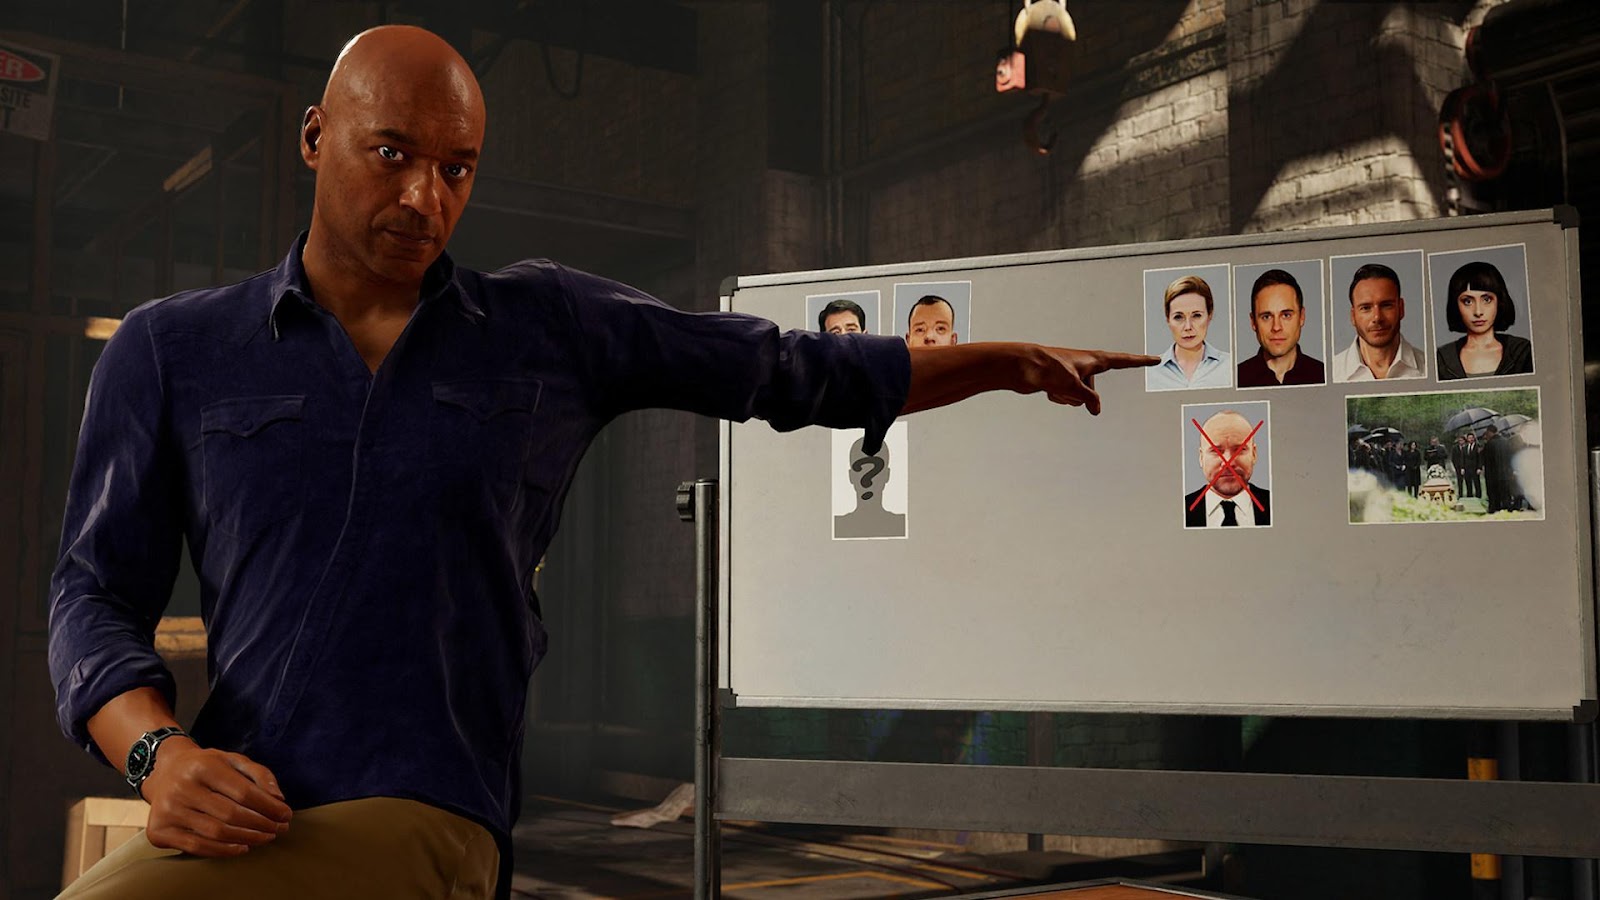 Najbolje PS VR igre: Policajac pokazuje na tablu na kojoj su zakačene sumnjive fotografije